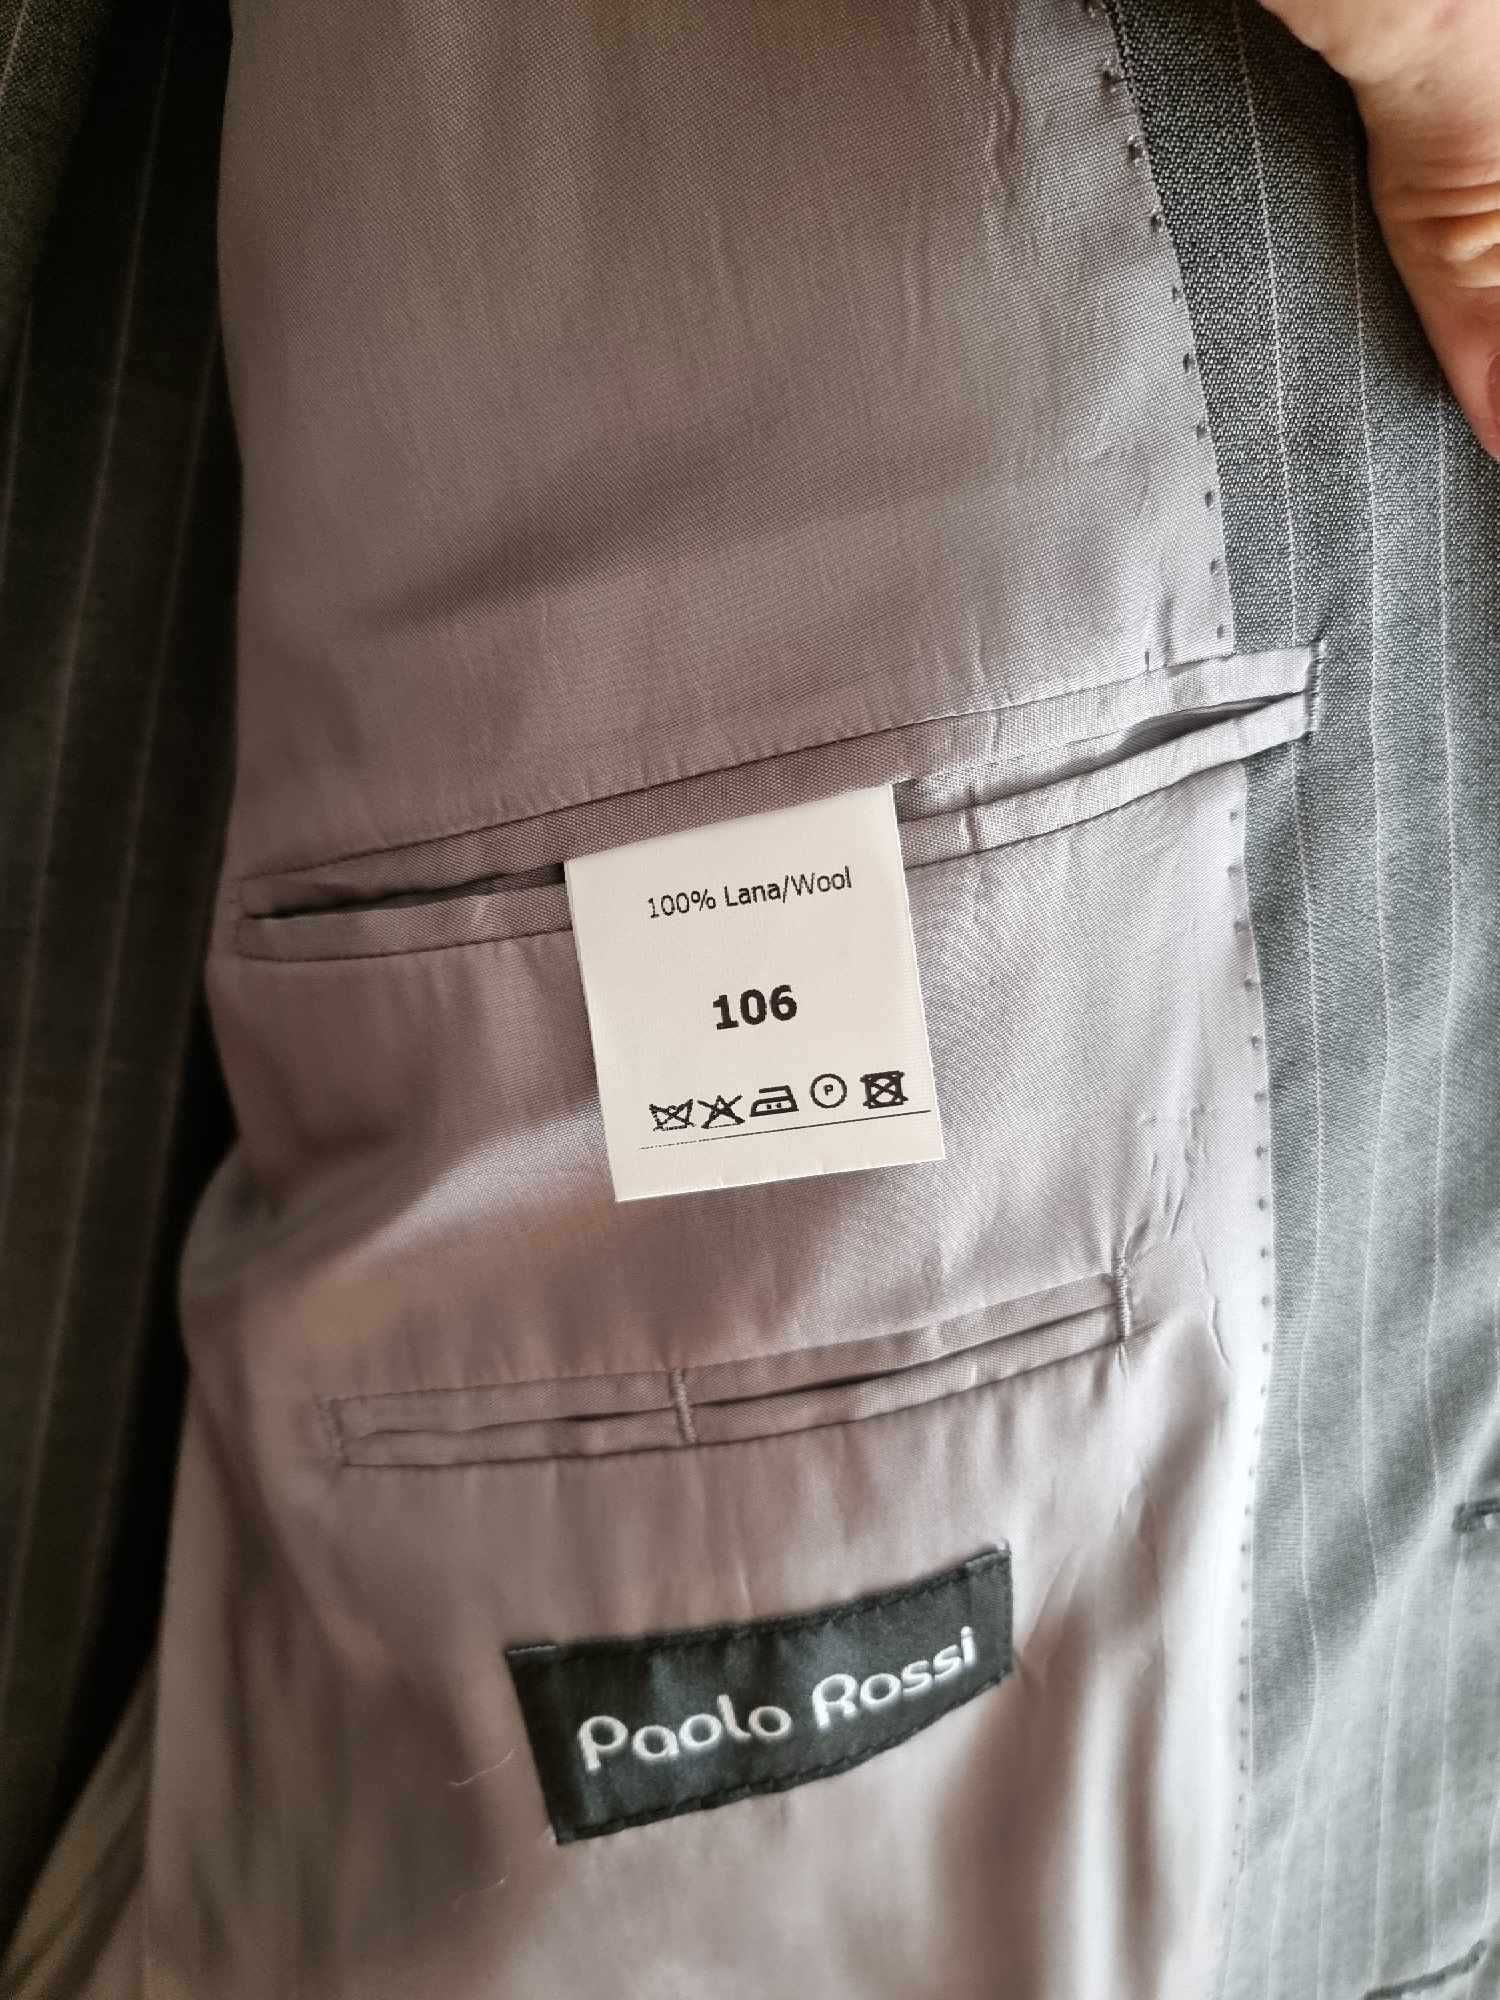 Vand costum de haine (sacou+pantaloni) Paolo Rossi